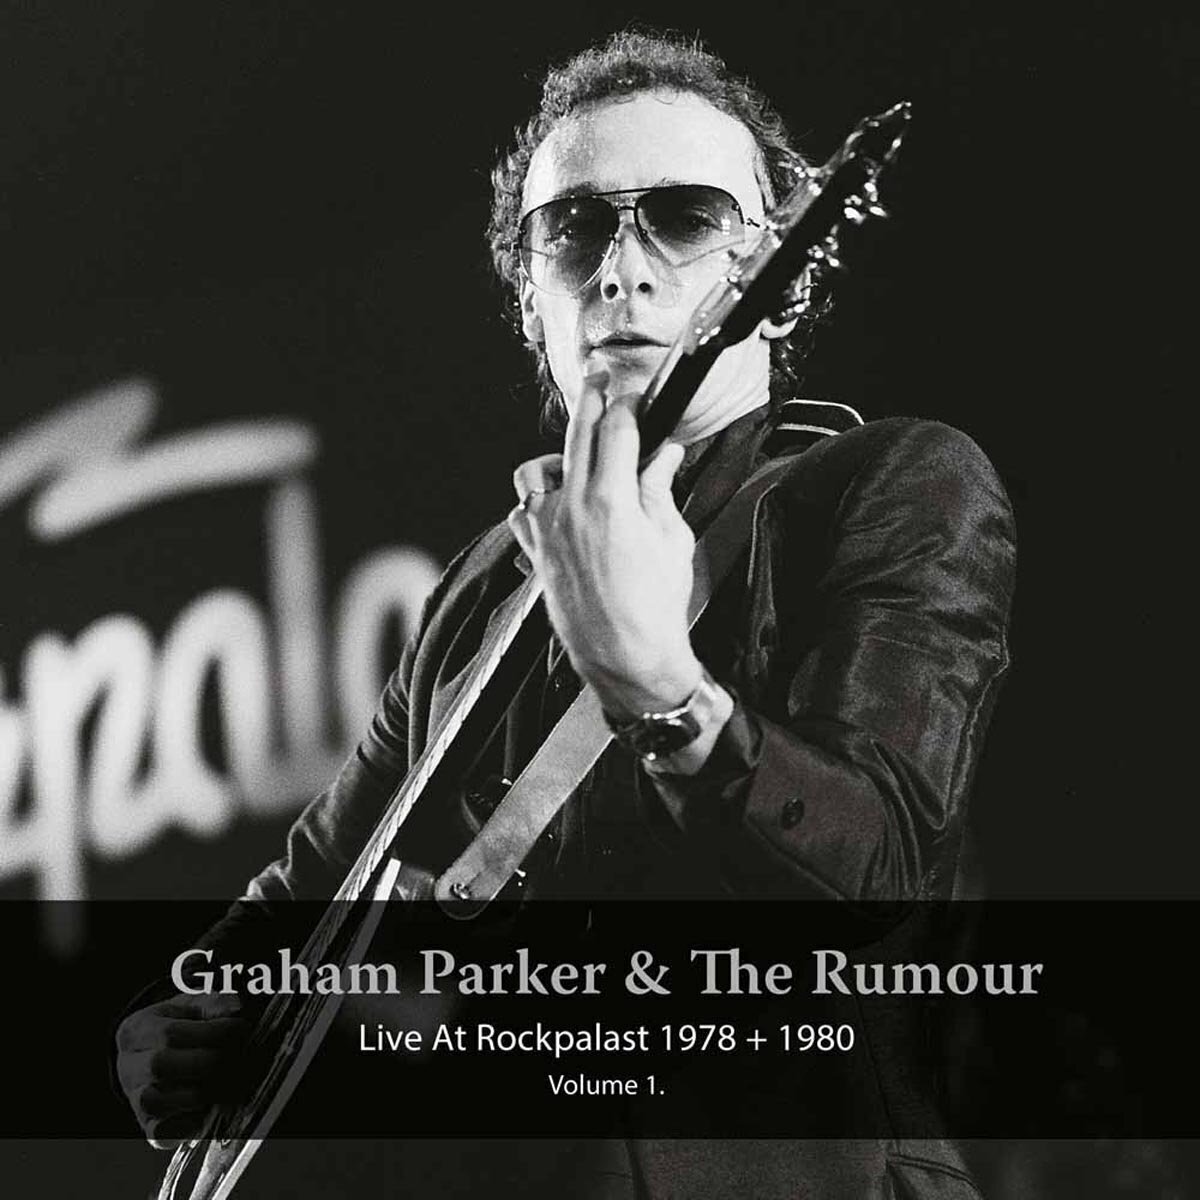 Vinylskiva Graham Parker & The Rumour - Live At Rockpalast 1978 + 1980 Vol 1 (2 LP)